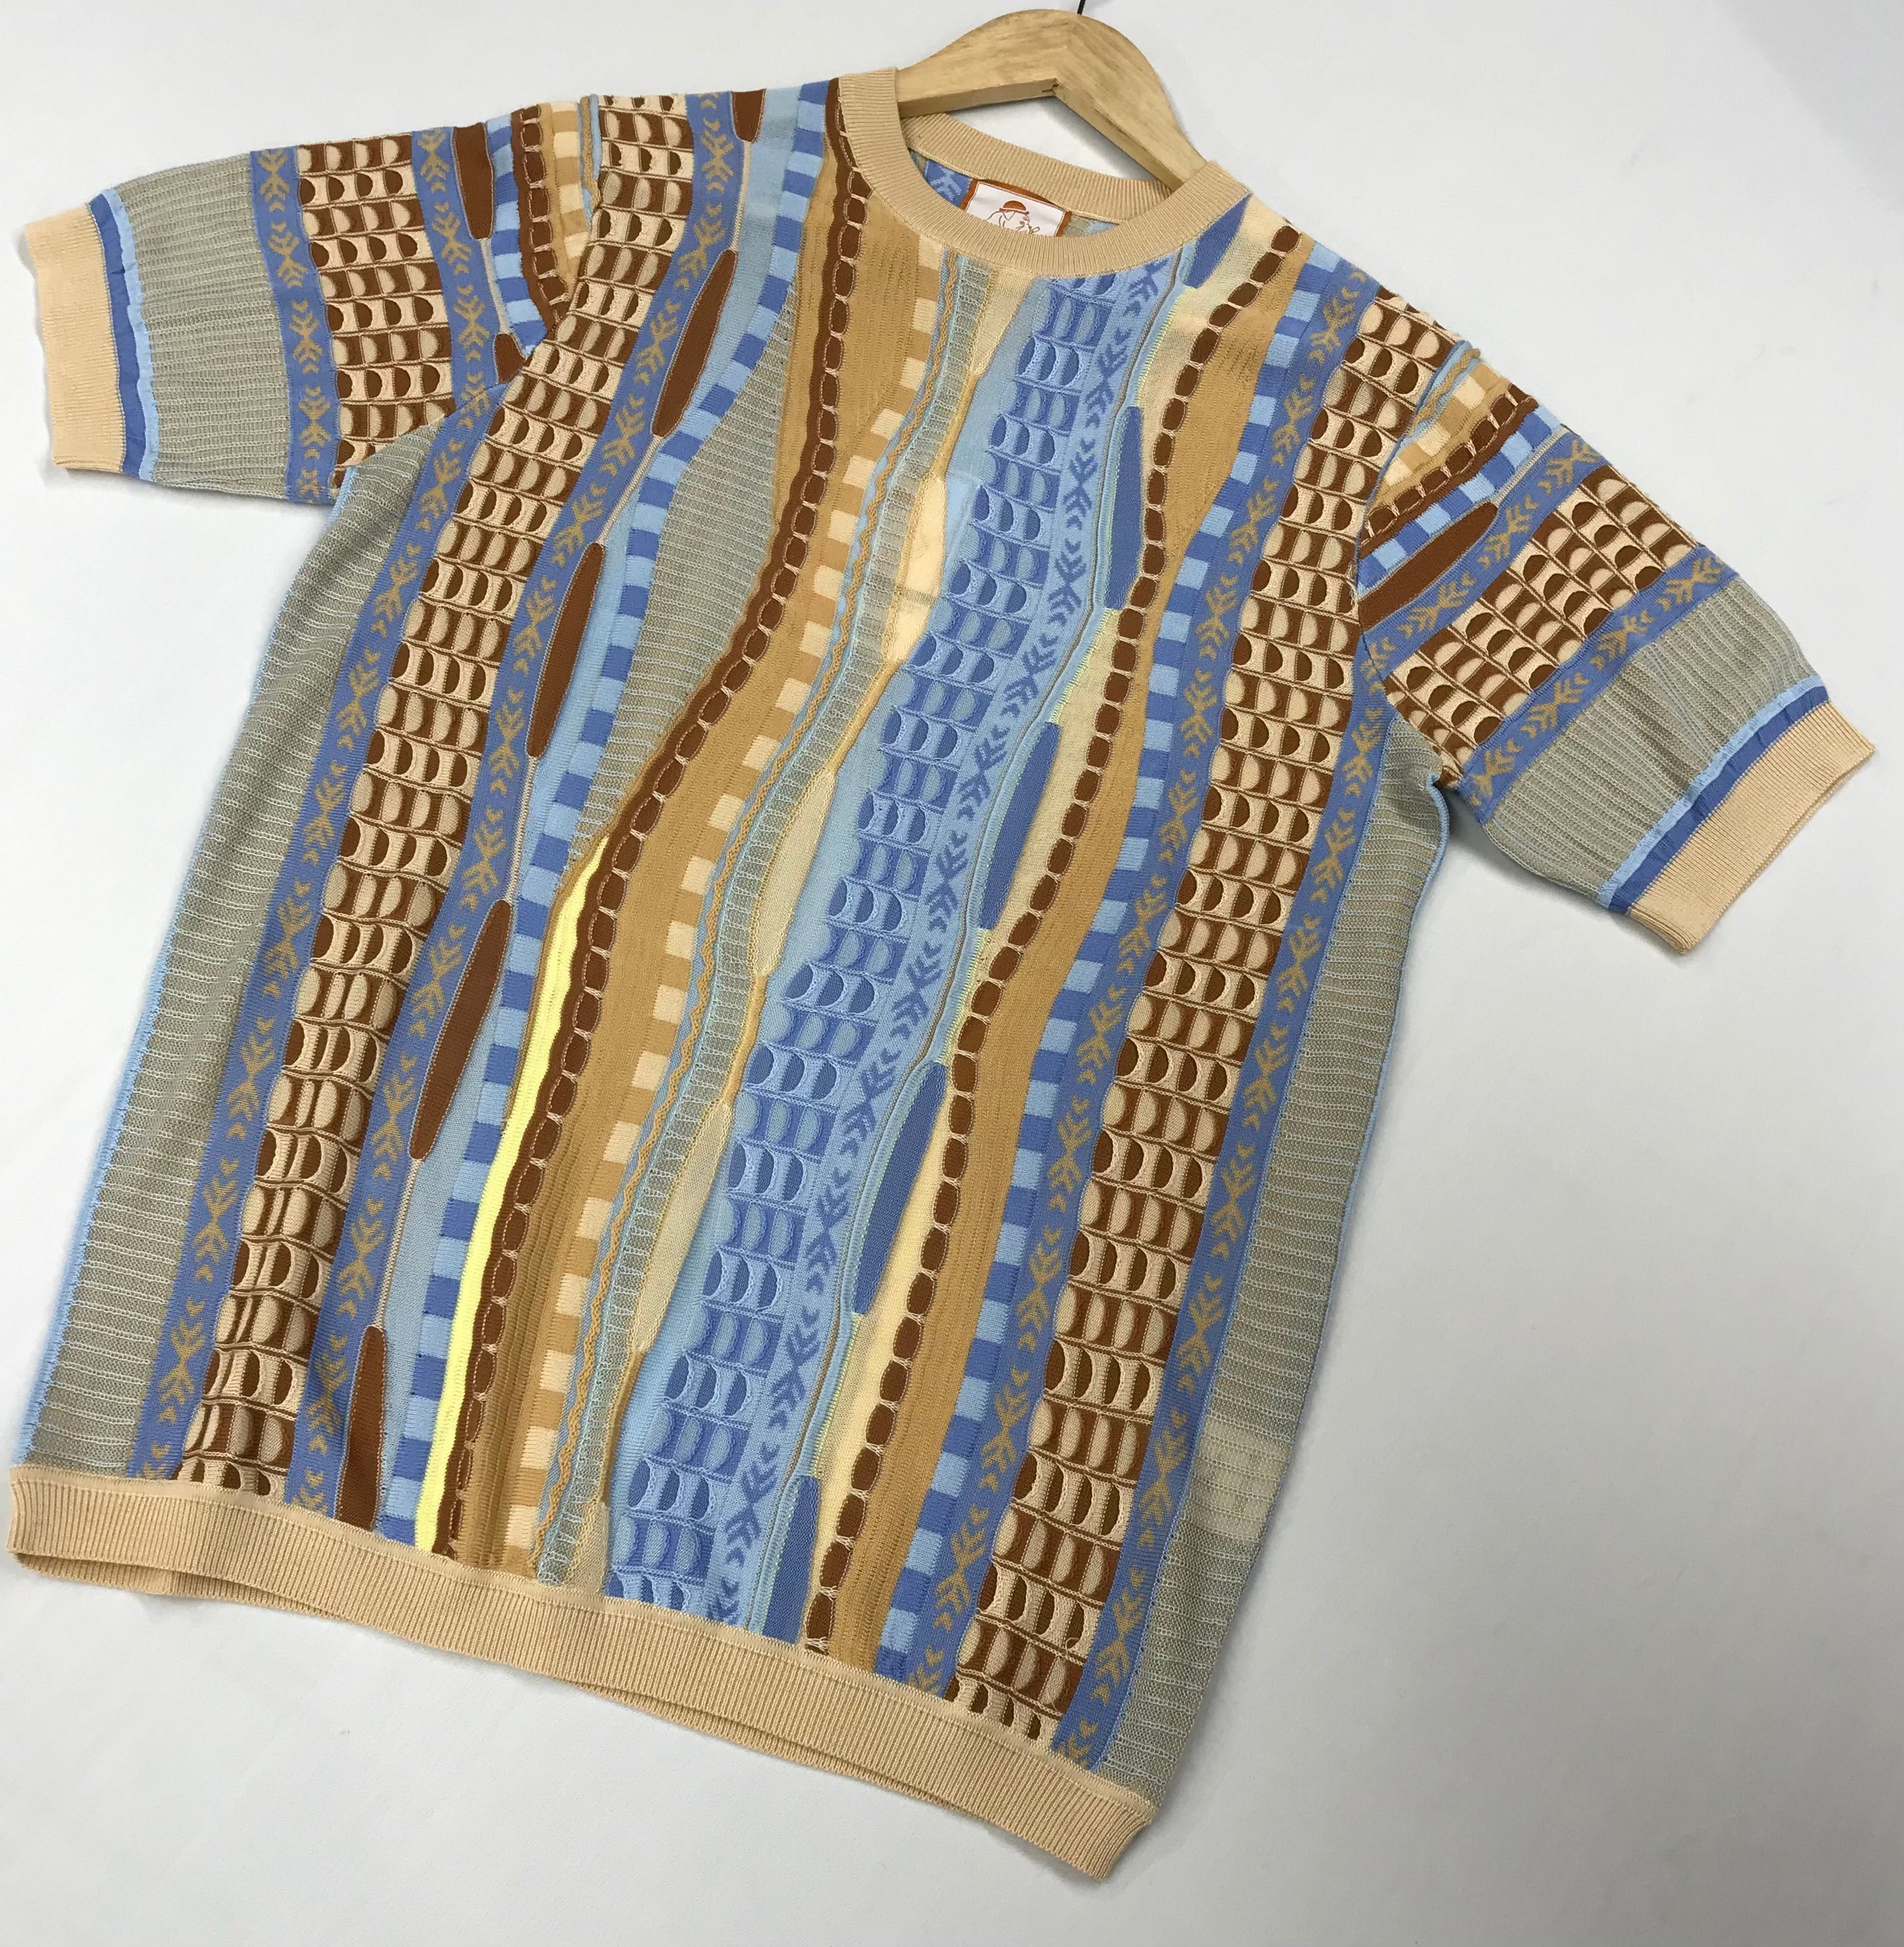 Couture Tan/Brown/Blue Short Sleeve Shirt